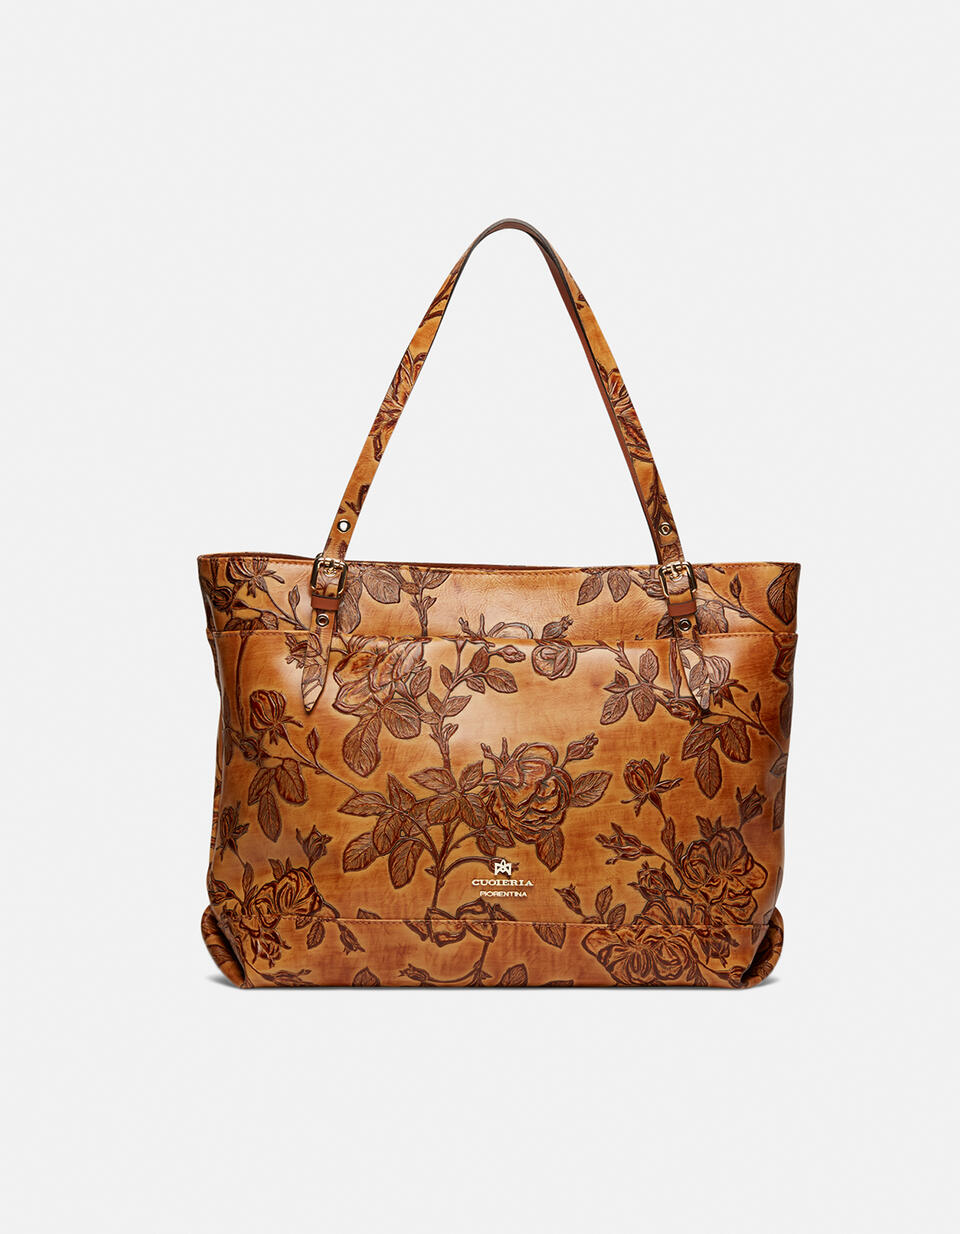 Big Mimì shopping bag keystone design - SHOPPING - WOMEN'S BAGS | bags Mimì BEIGE - SHOPPING - WOMEN'S BAGS | bagsCuoieria Fiorentina